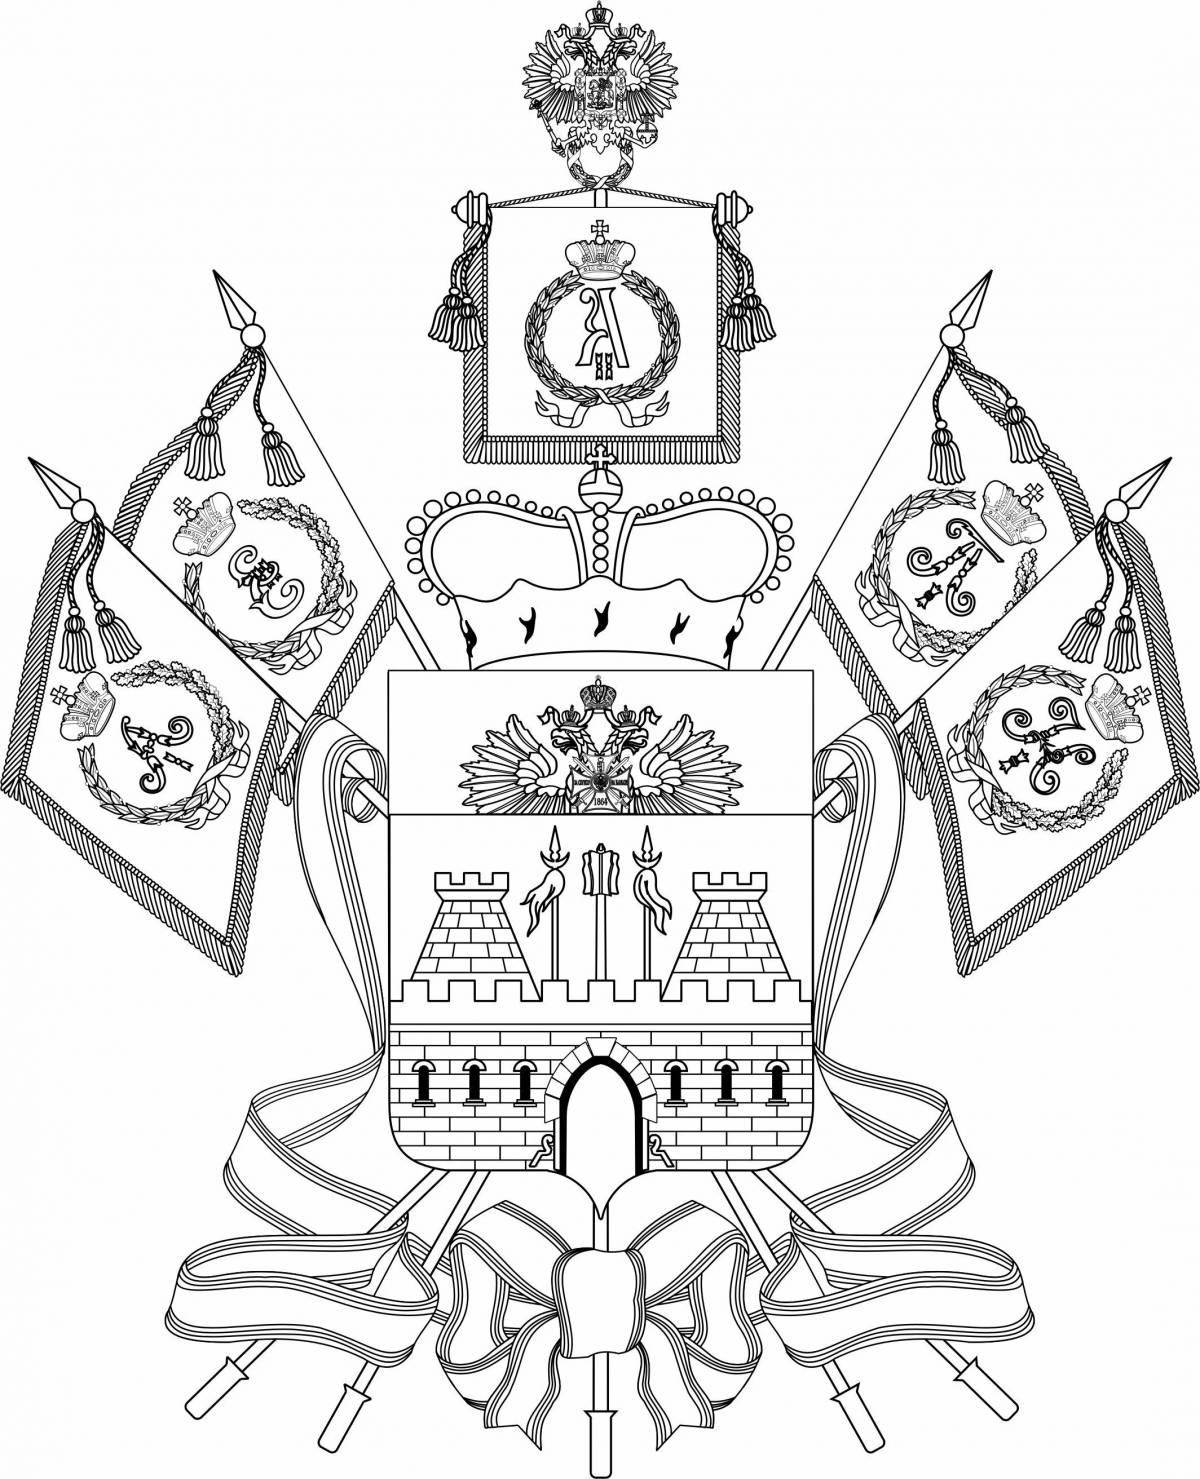 Charming coloring coat of arms of krasnodar